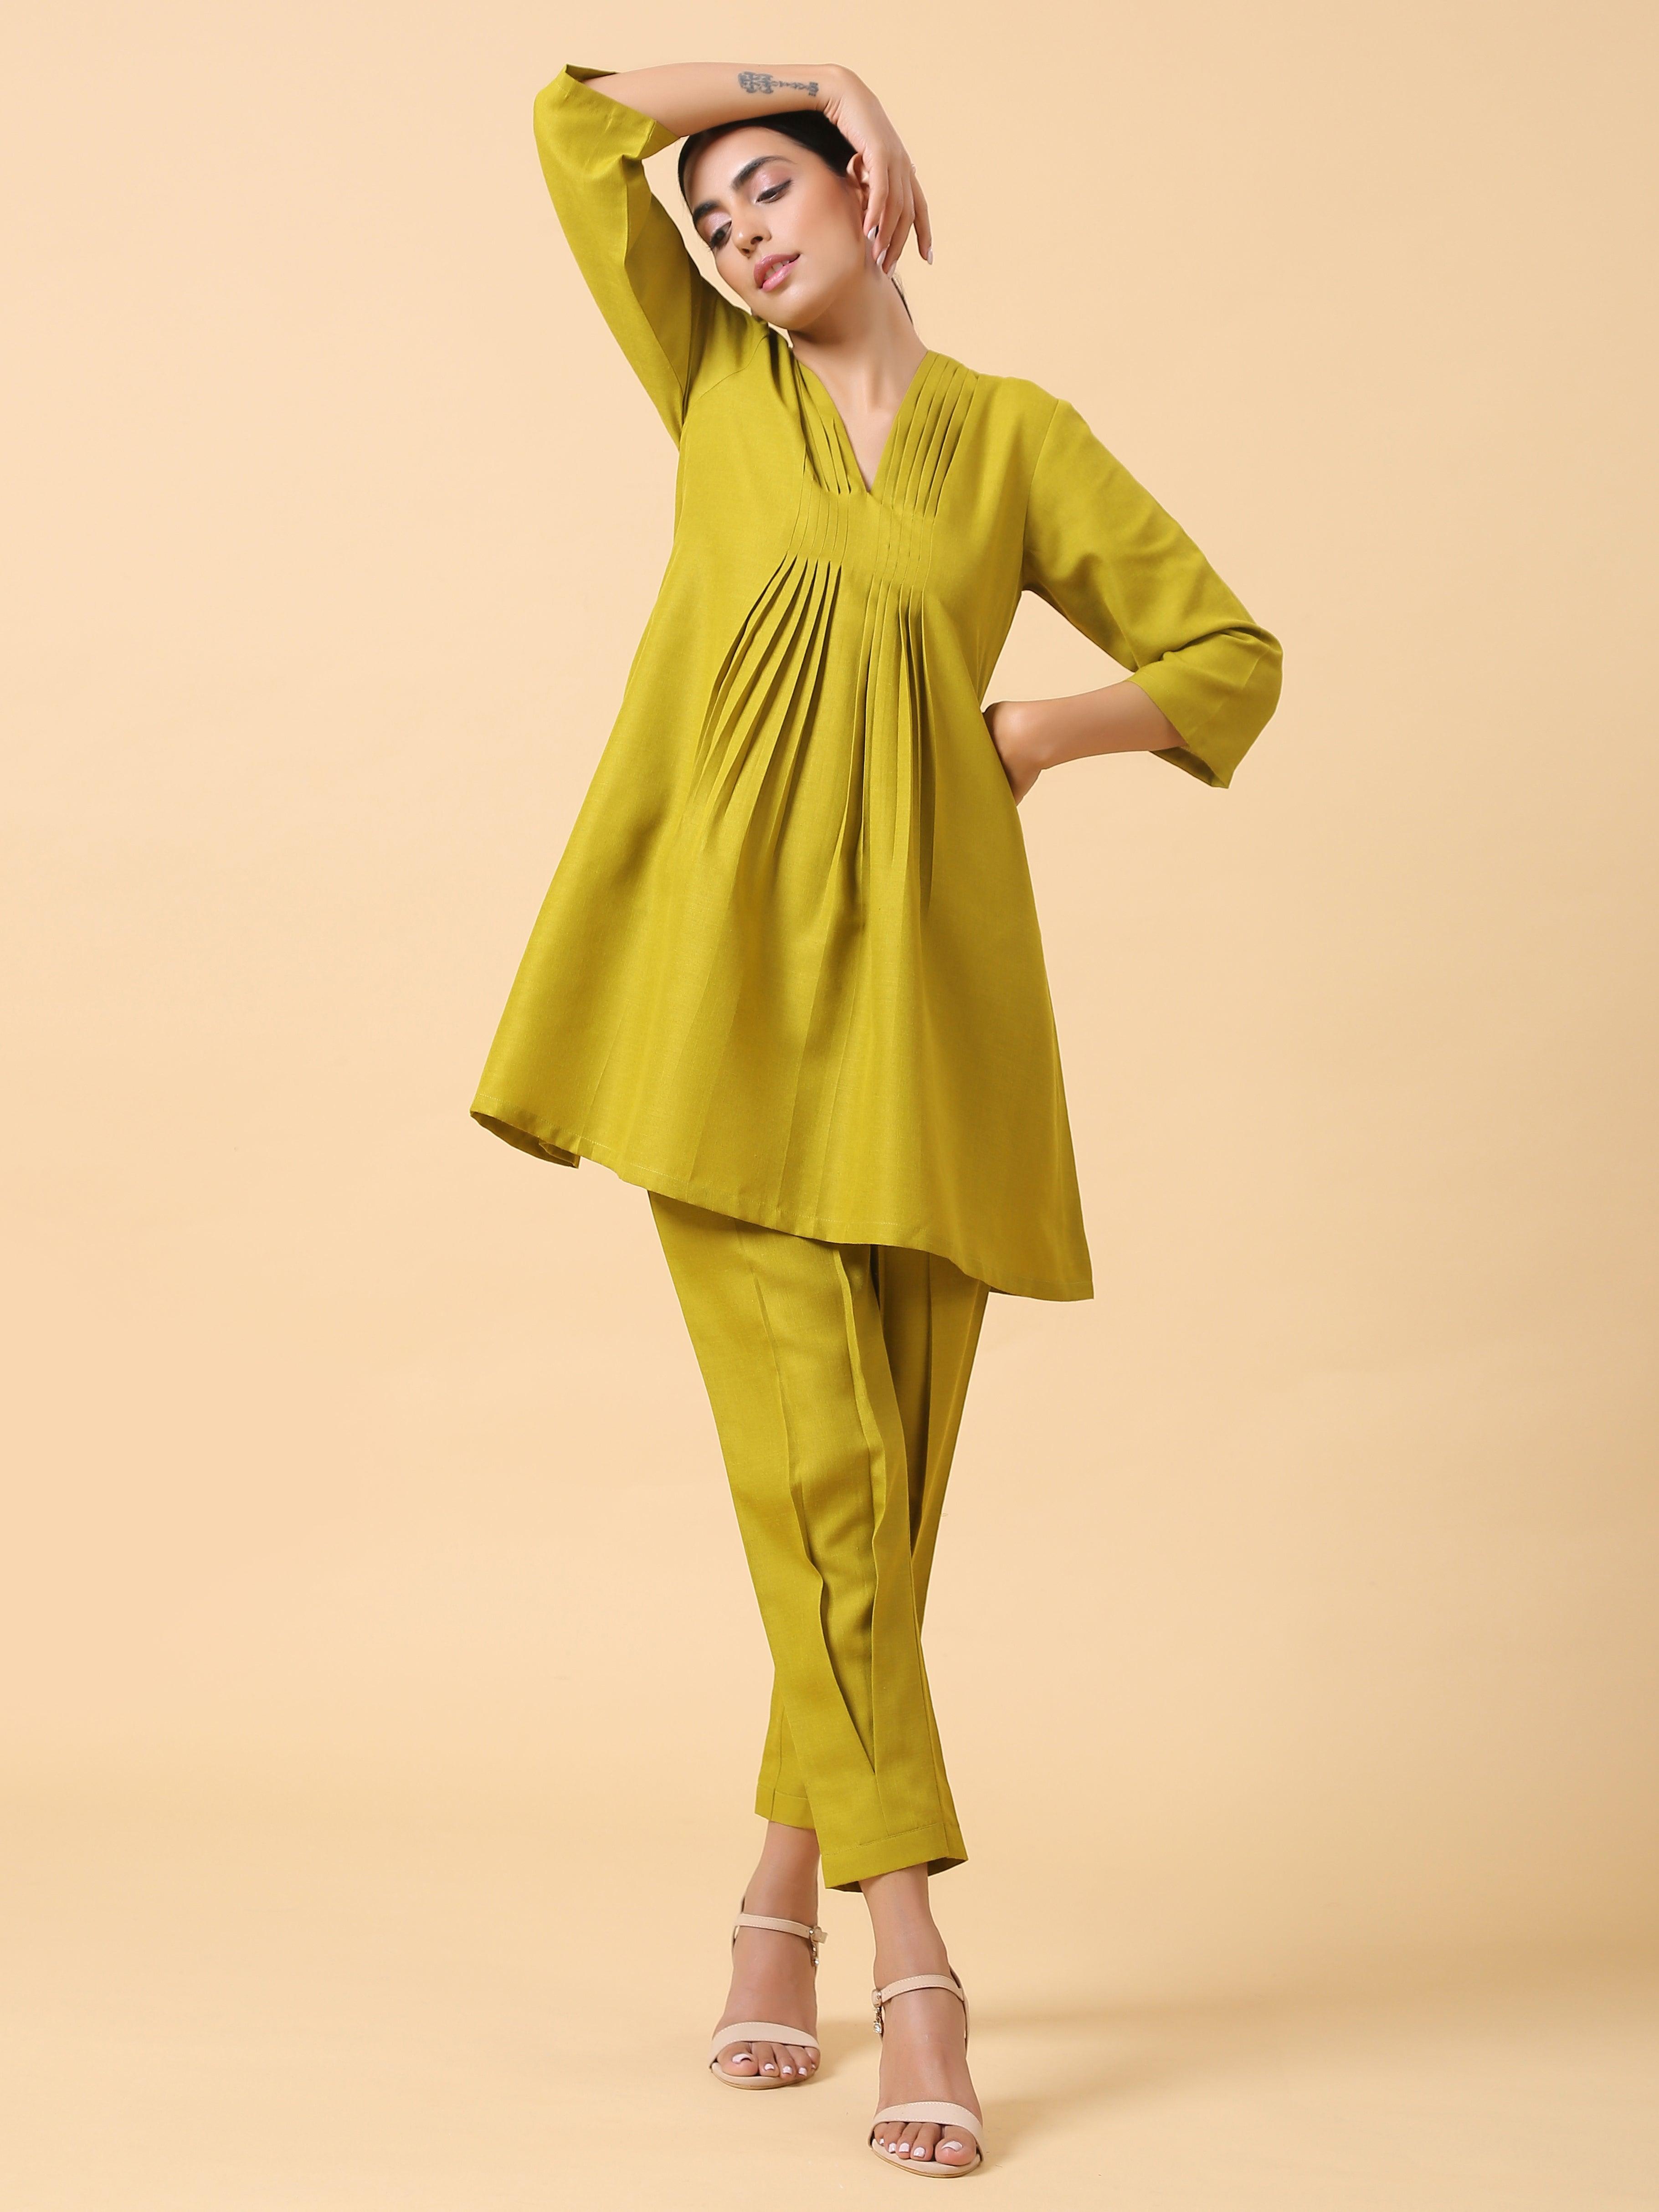 Pinkcity Garments premium printed Rayon Latest trend Kurti comfortable feel  ultimate highlighted Printed design stunning look